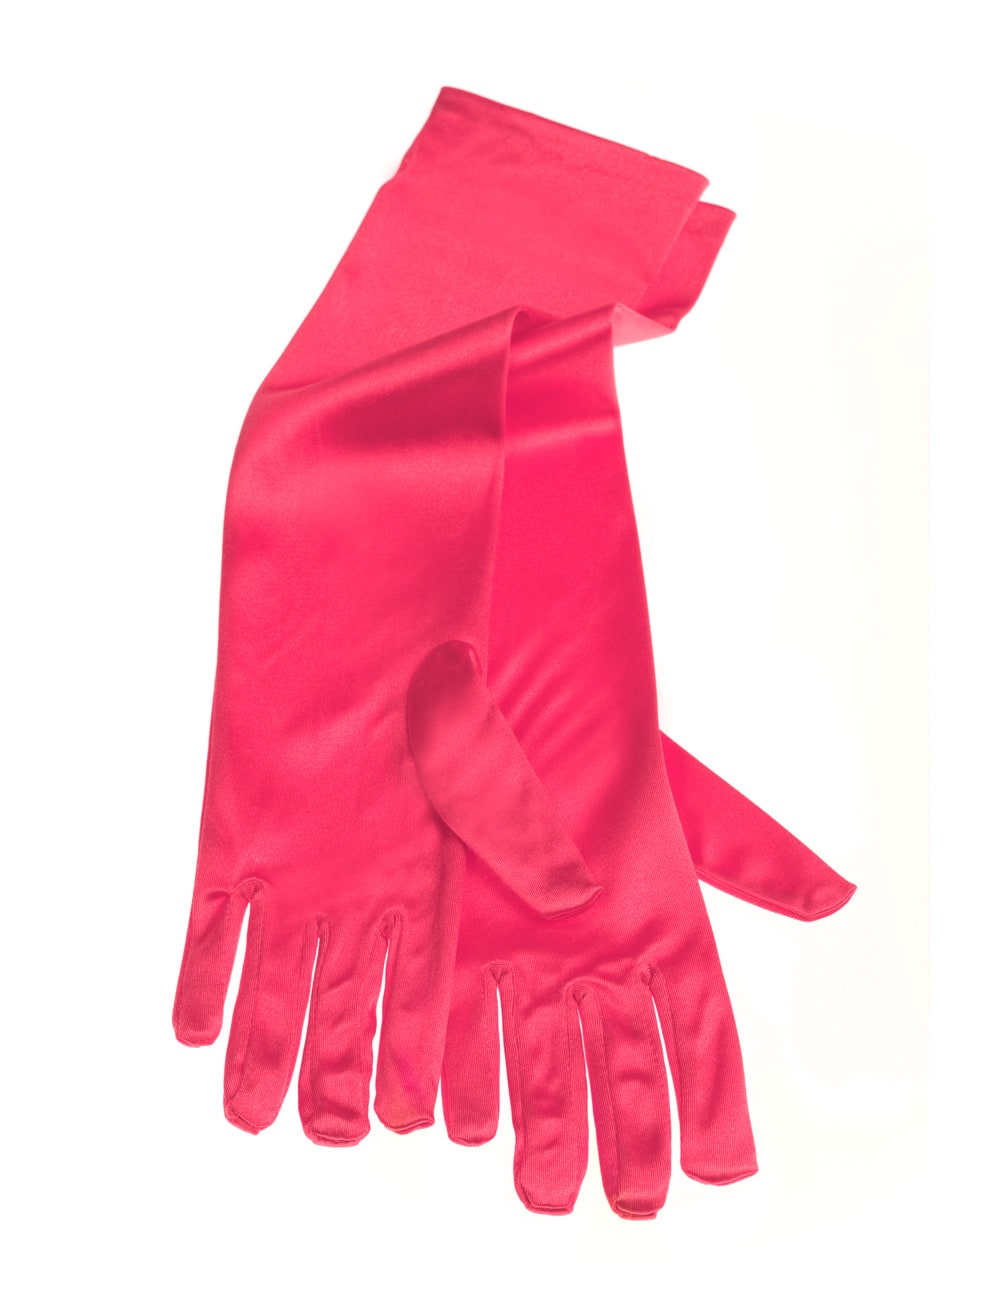 Handschuhe Satin 40cm Damen pink one size